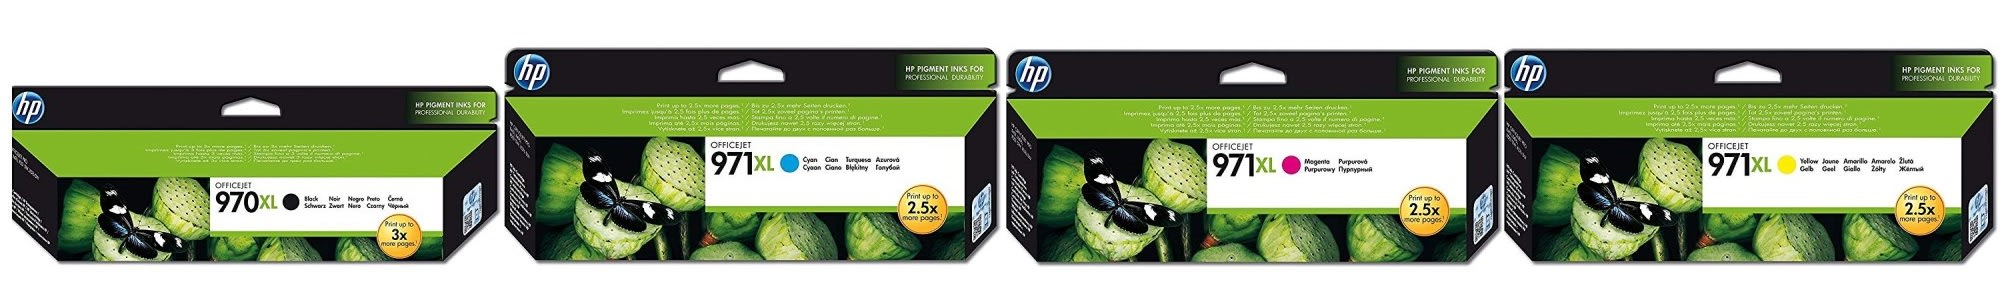 Картриджи hp 970XL hp 971XL для HP OfficeJet Pro X576dw. Купить комплект оригинальных картриджей.